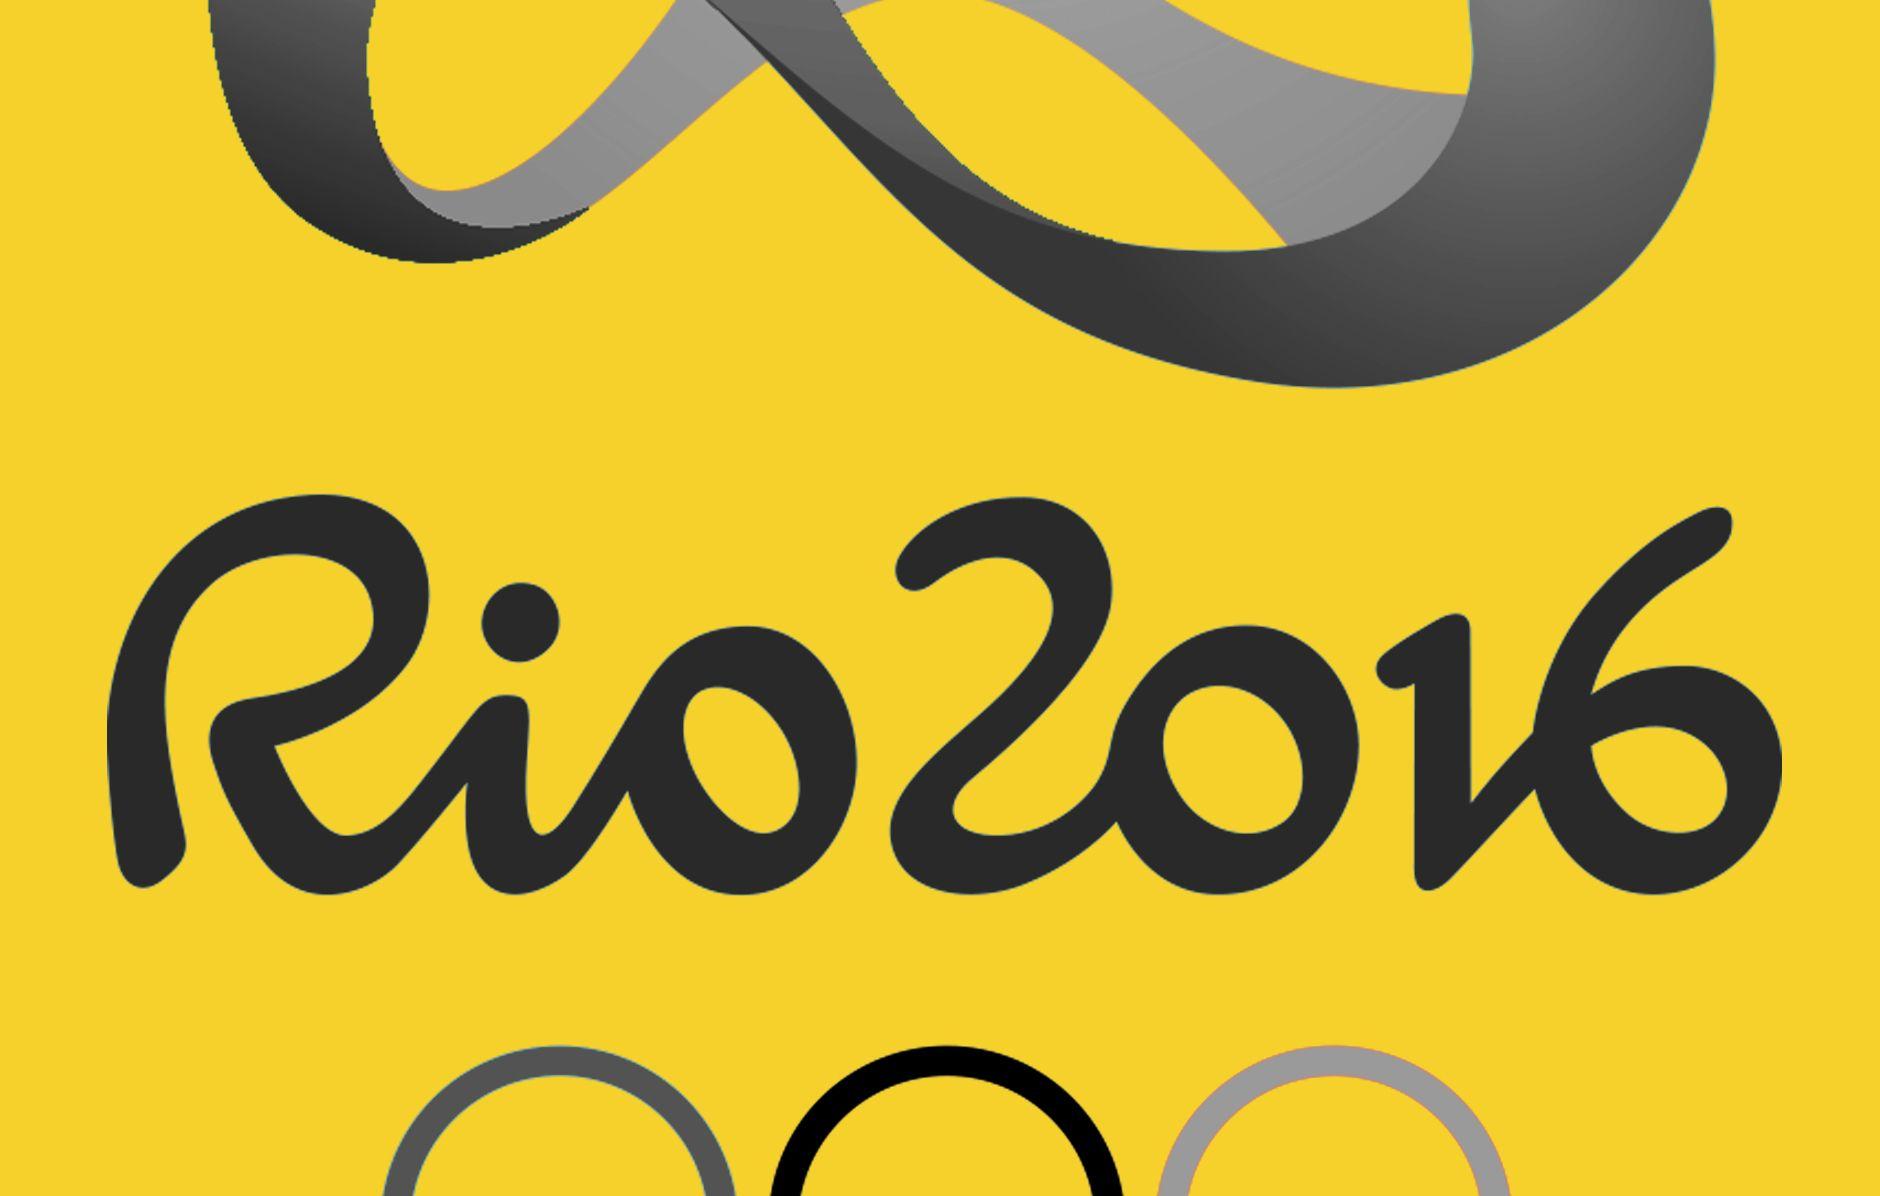 Rio 2016 Logo - New Brand Logo & Rio 2016 Olympic Games | BrandingBusiness